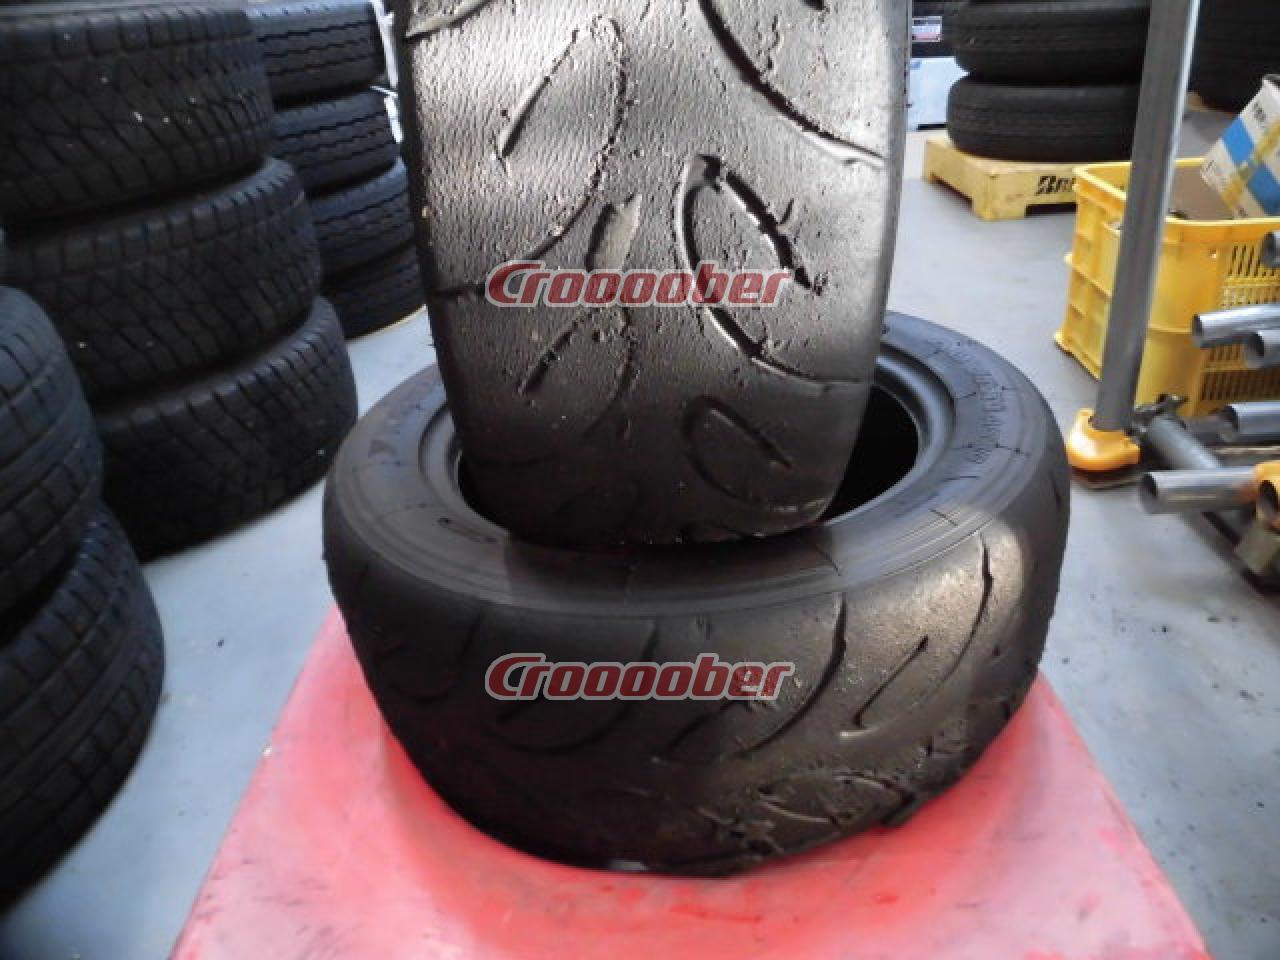 YOKOHAMA ADVAN A050 Compound M | 15 Inch Tire | Croooober